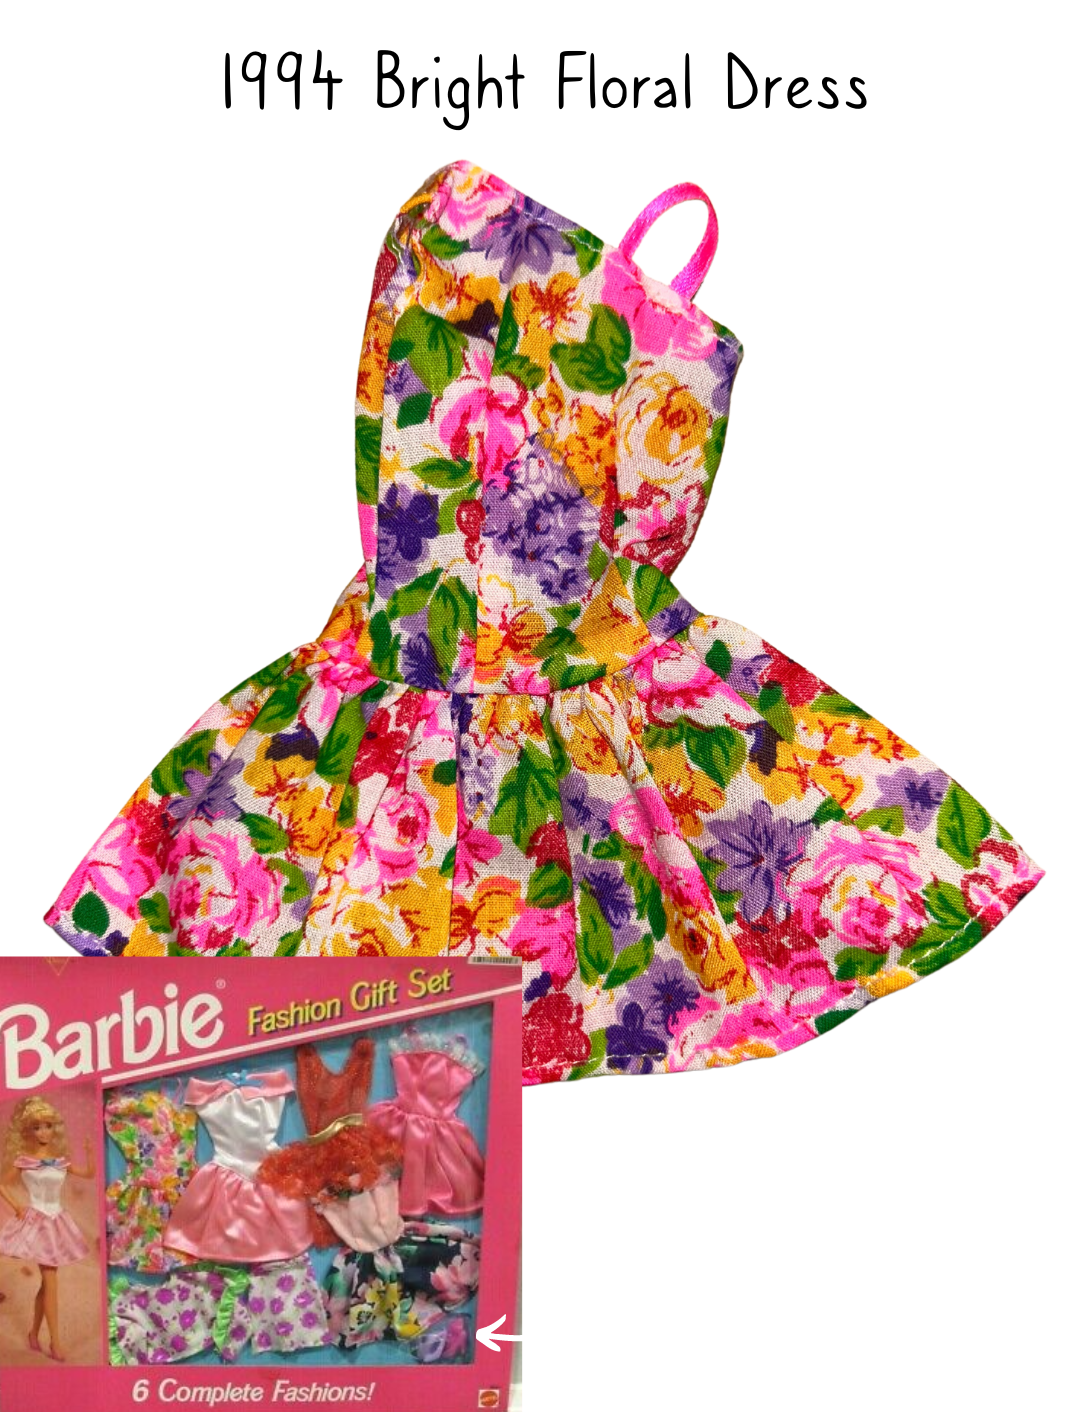 1994 Barbie Fashion Gift Set Bright Floral Dress